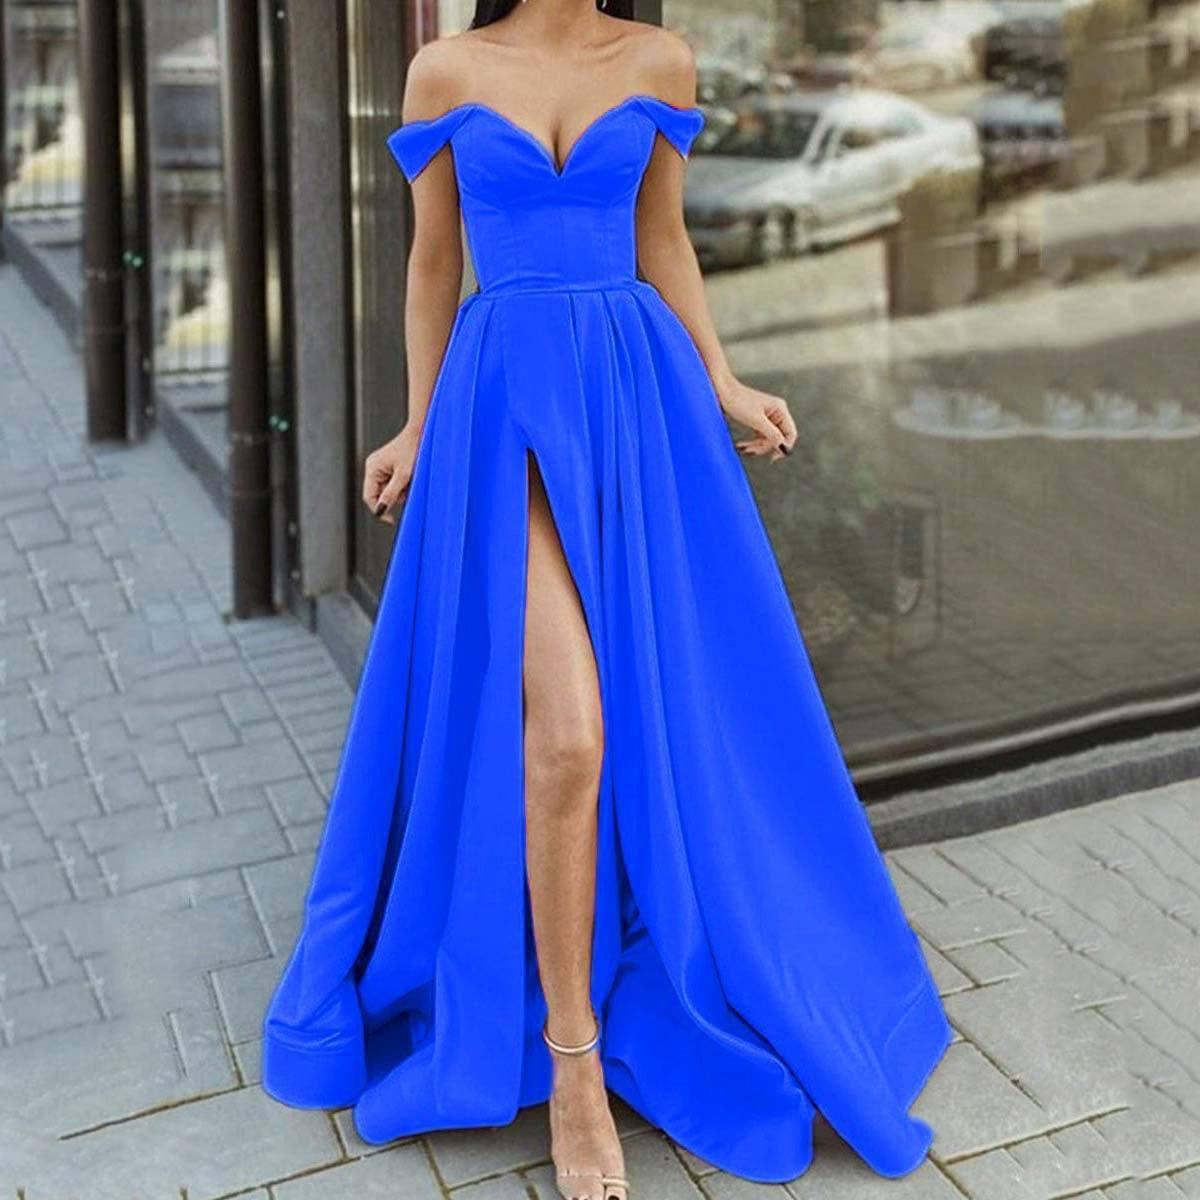 Women's Multicolor Tube Top V-neck Backless Dress-Blue-6